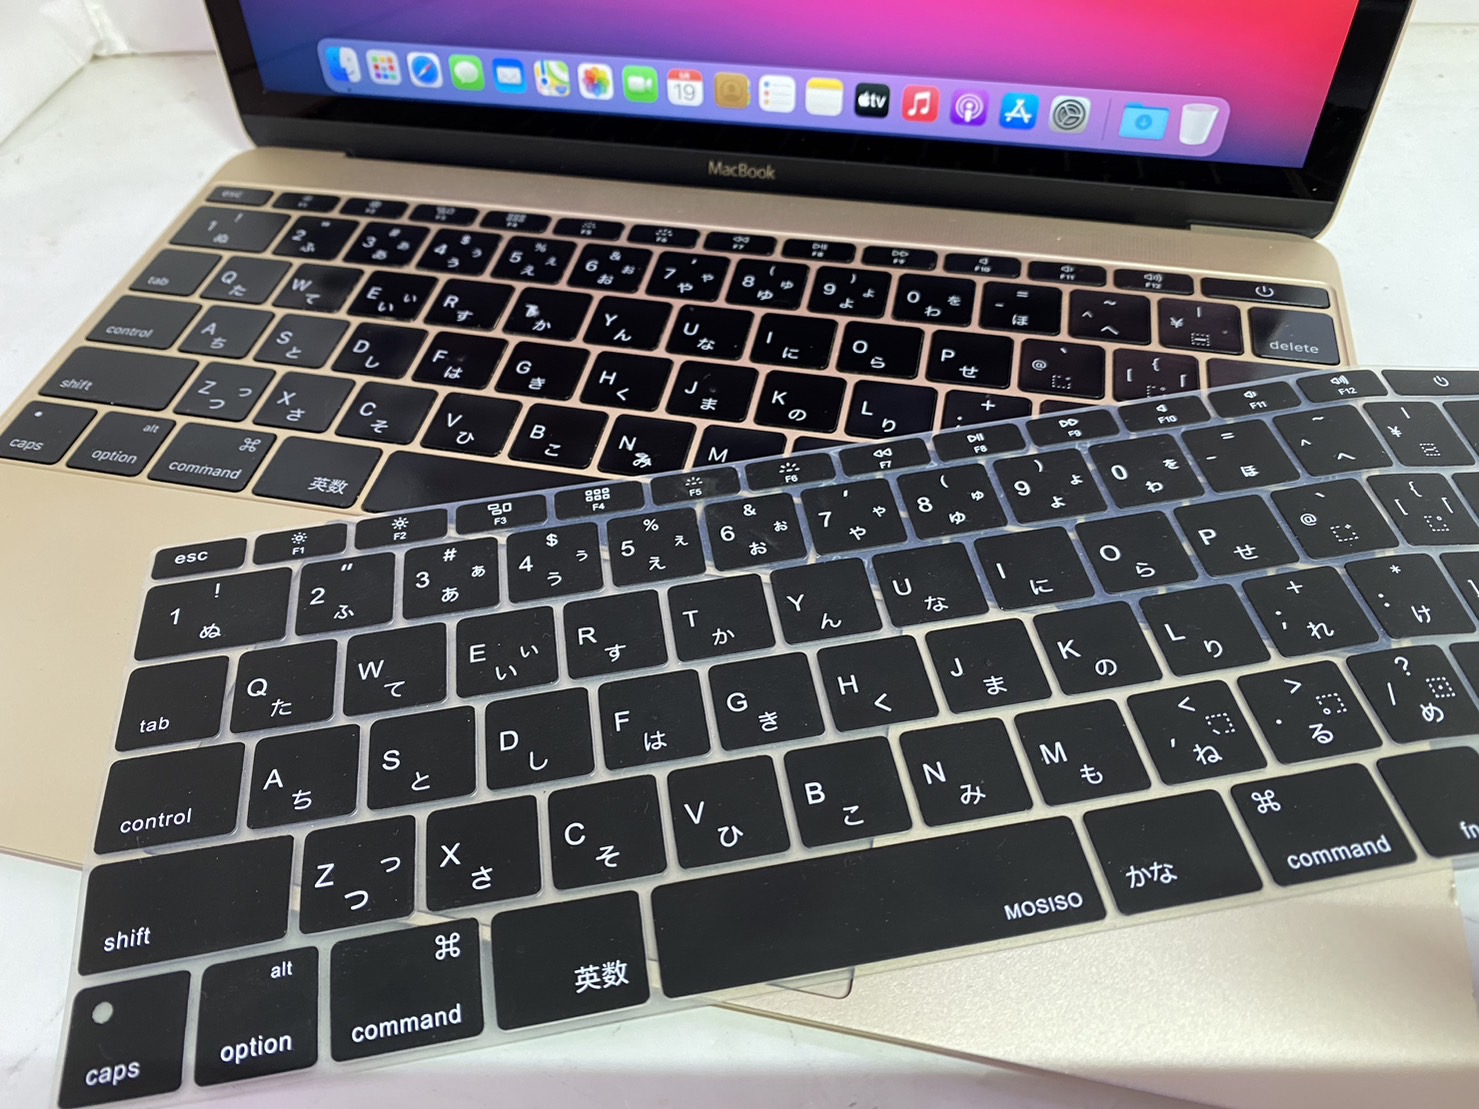 APPLE(アップル) MacBook (Retina, 12-inch, Early 2015) A1534の激安 ...